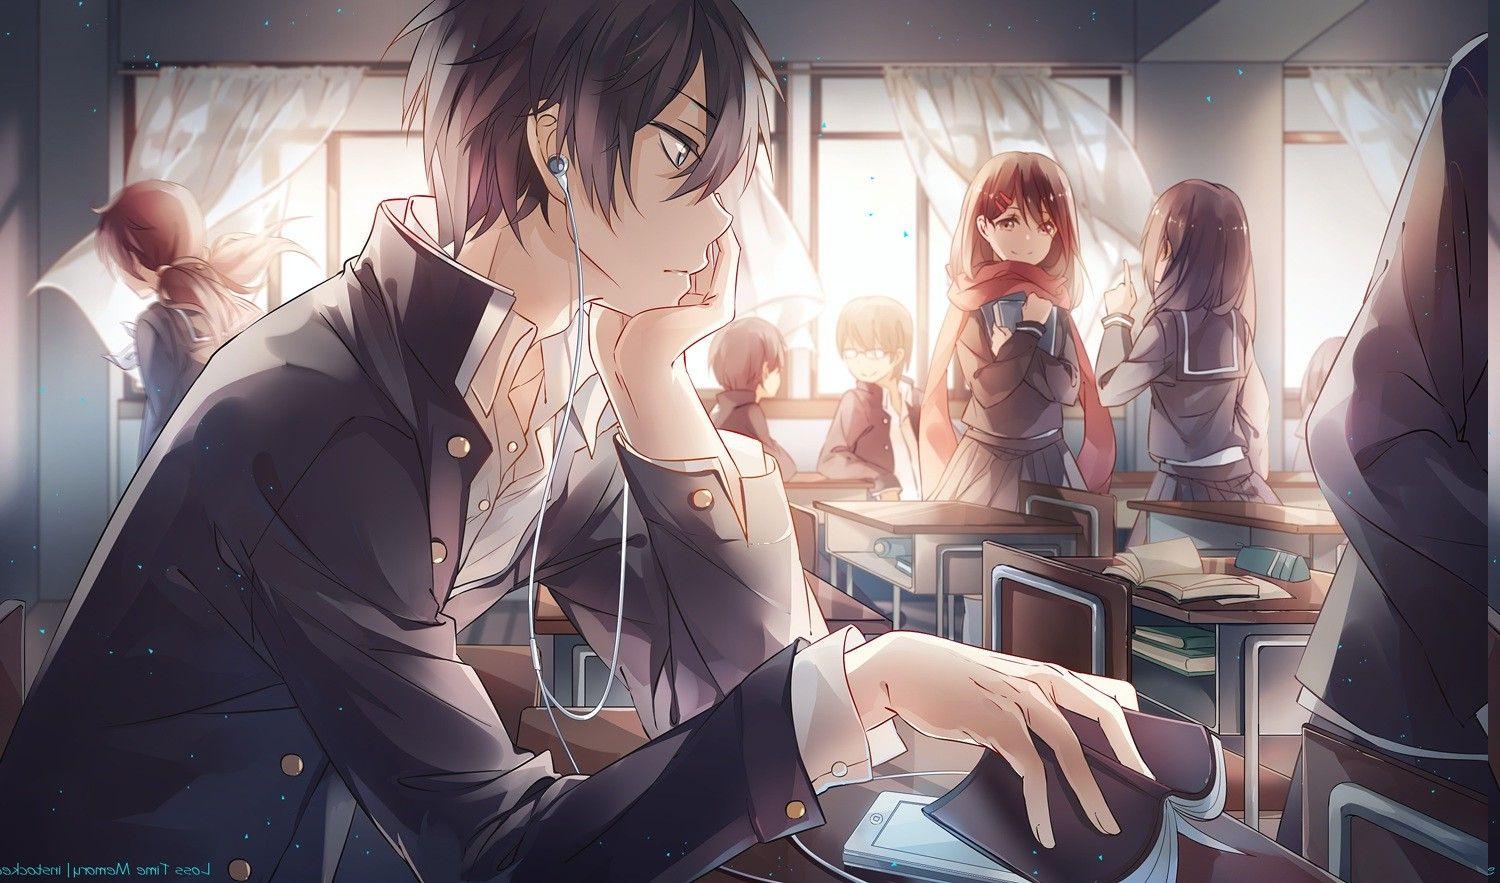 Anime School Desk Wallpaper Download